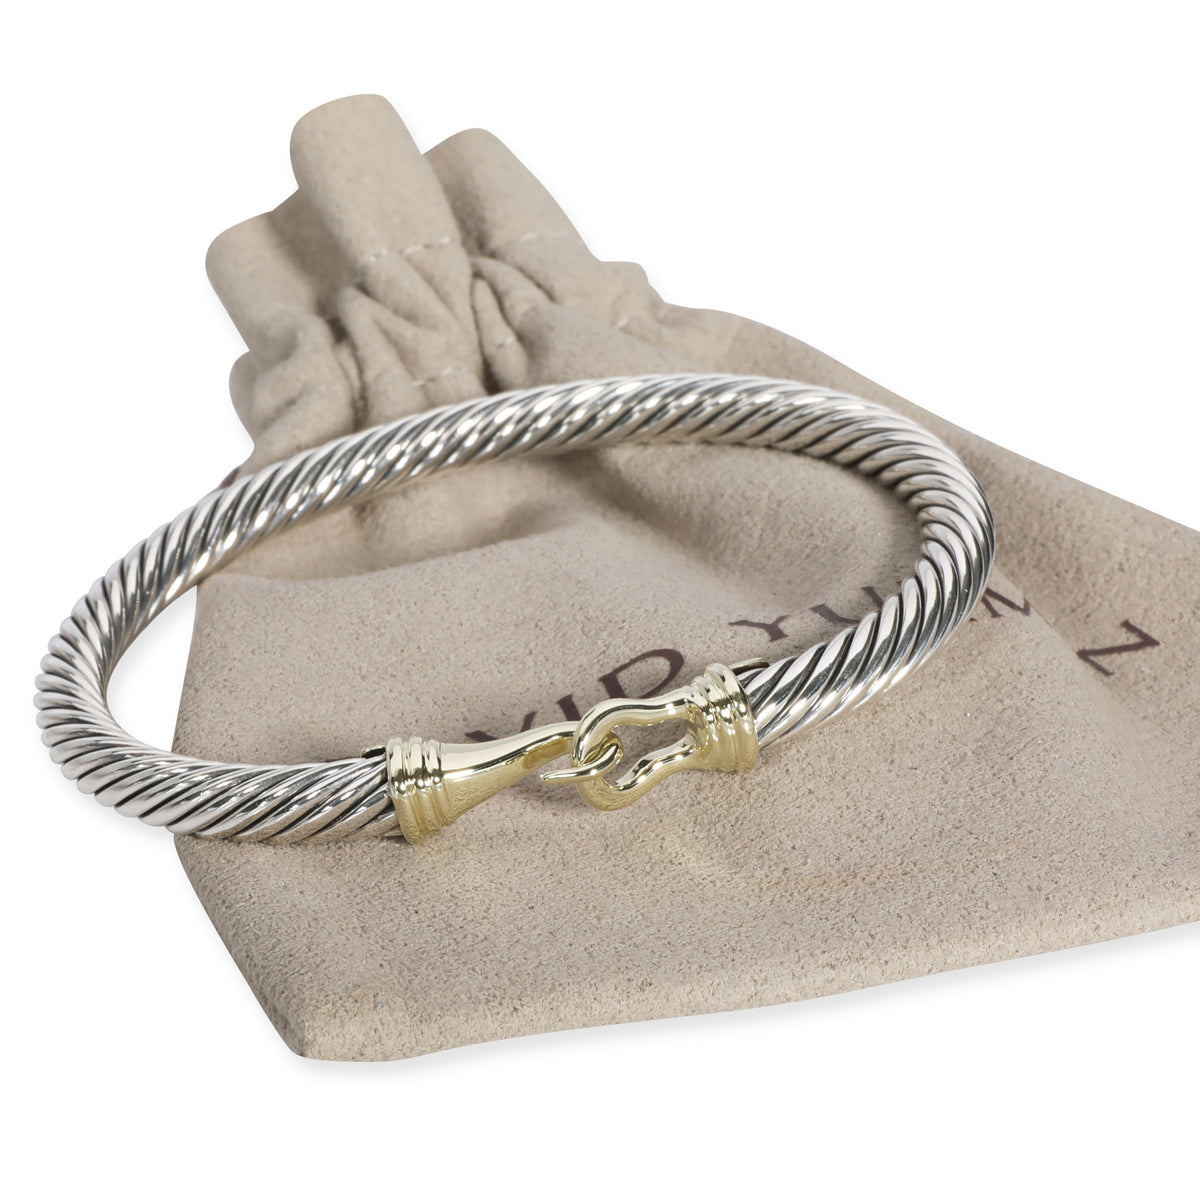 David Yurman Cable Hook Bracelet in 14K Yellow Gold & Sterling Silver